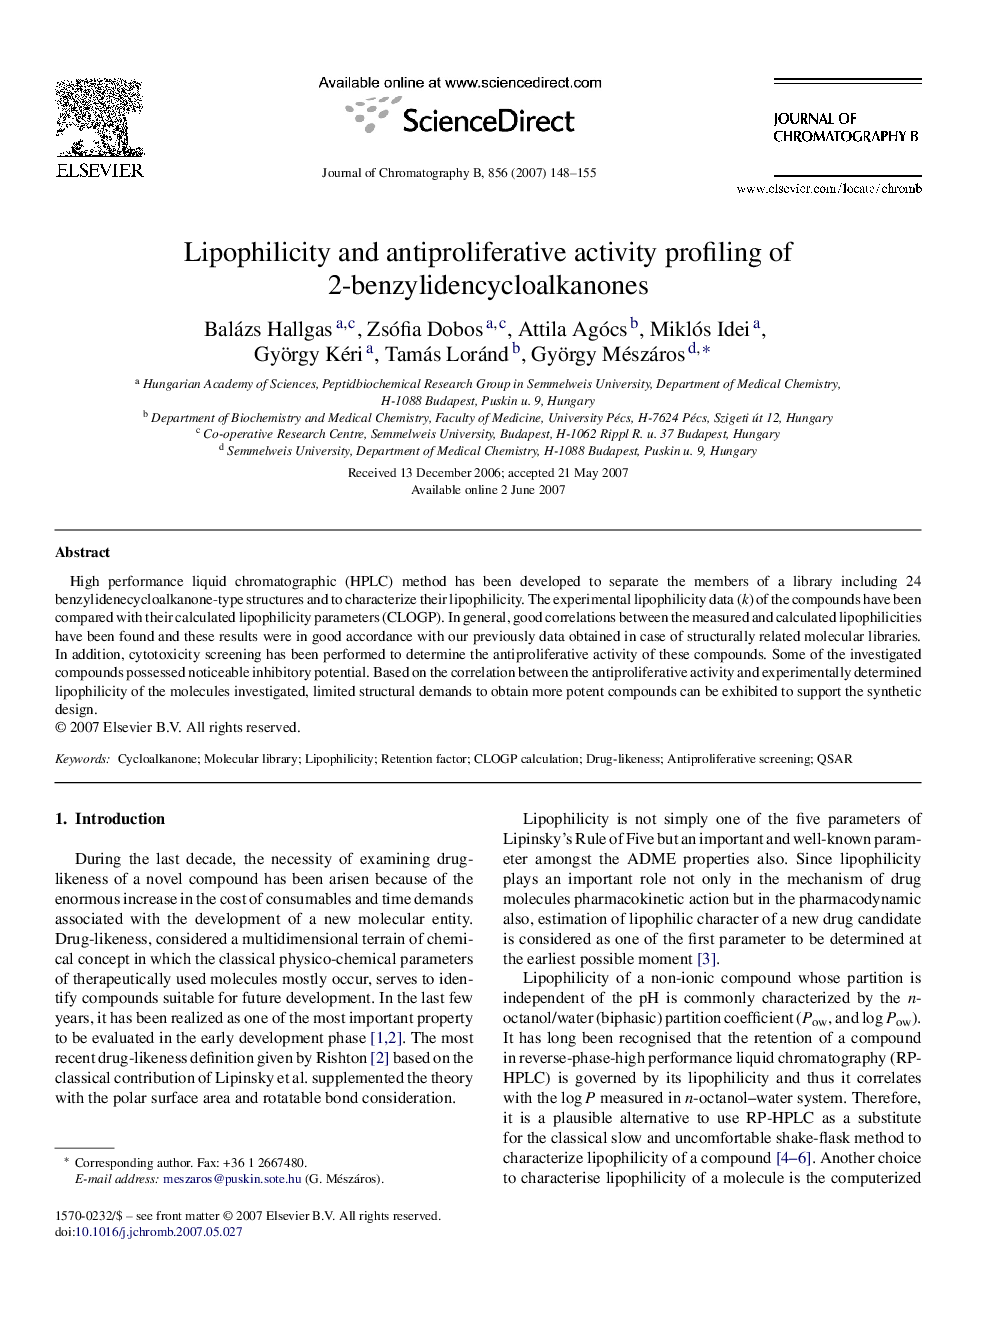 Lipophilicity and antiproliferative activity profiling of 2-benzylidencycloalkanones